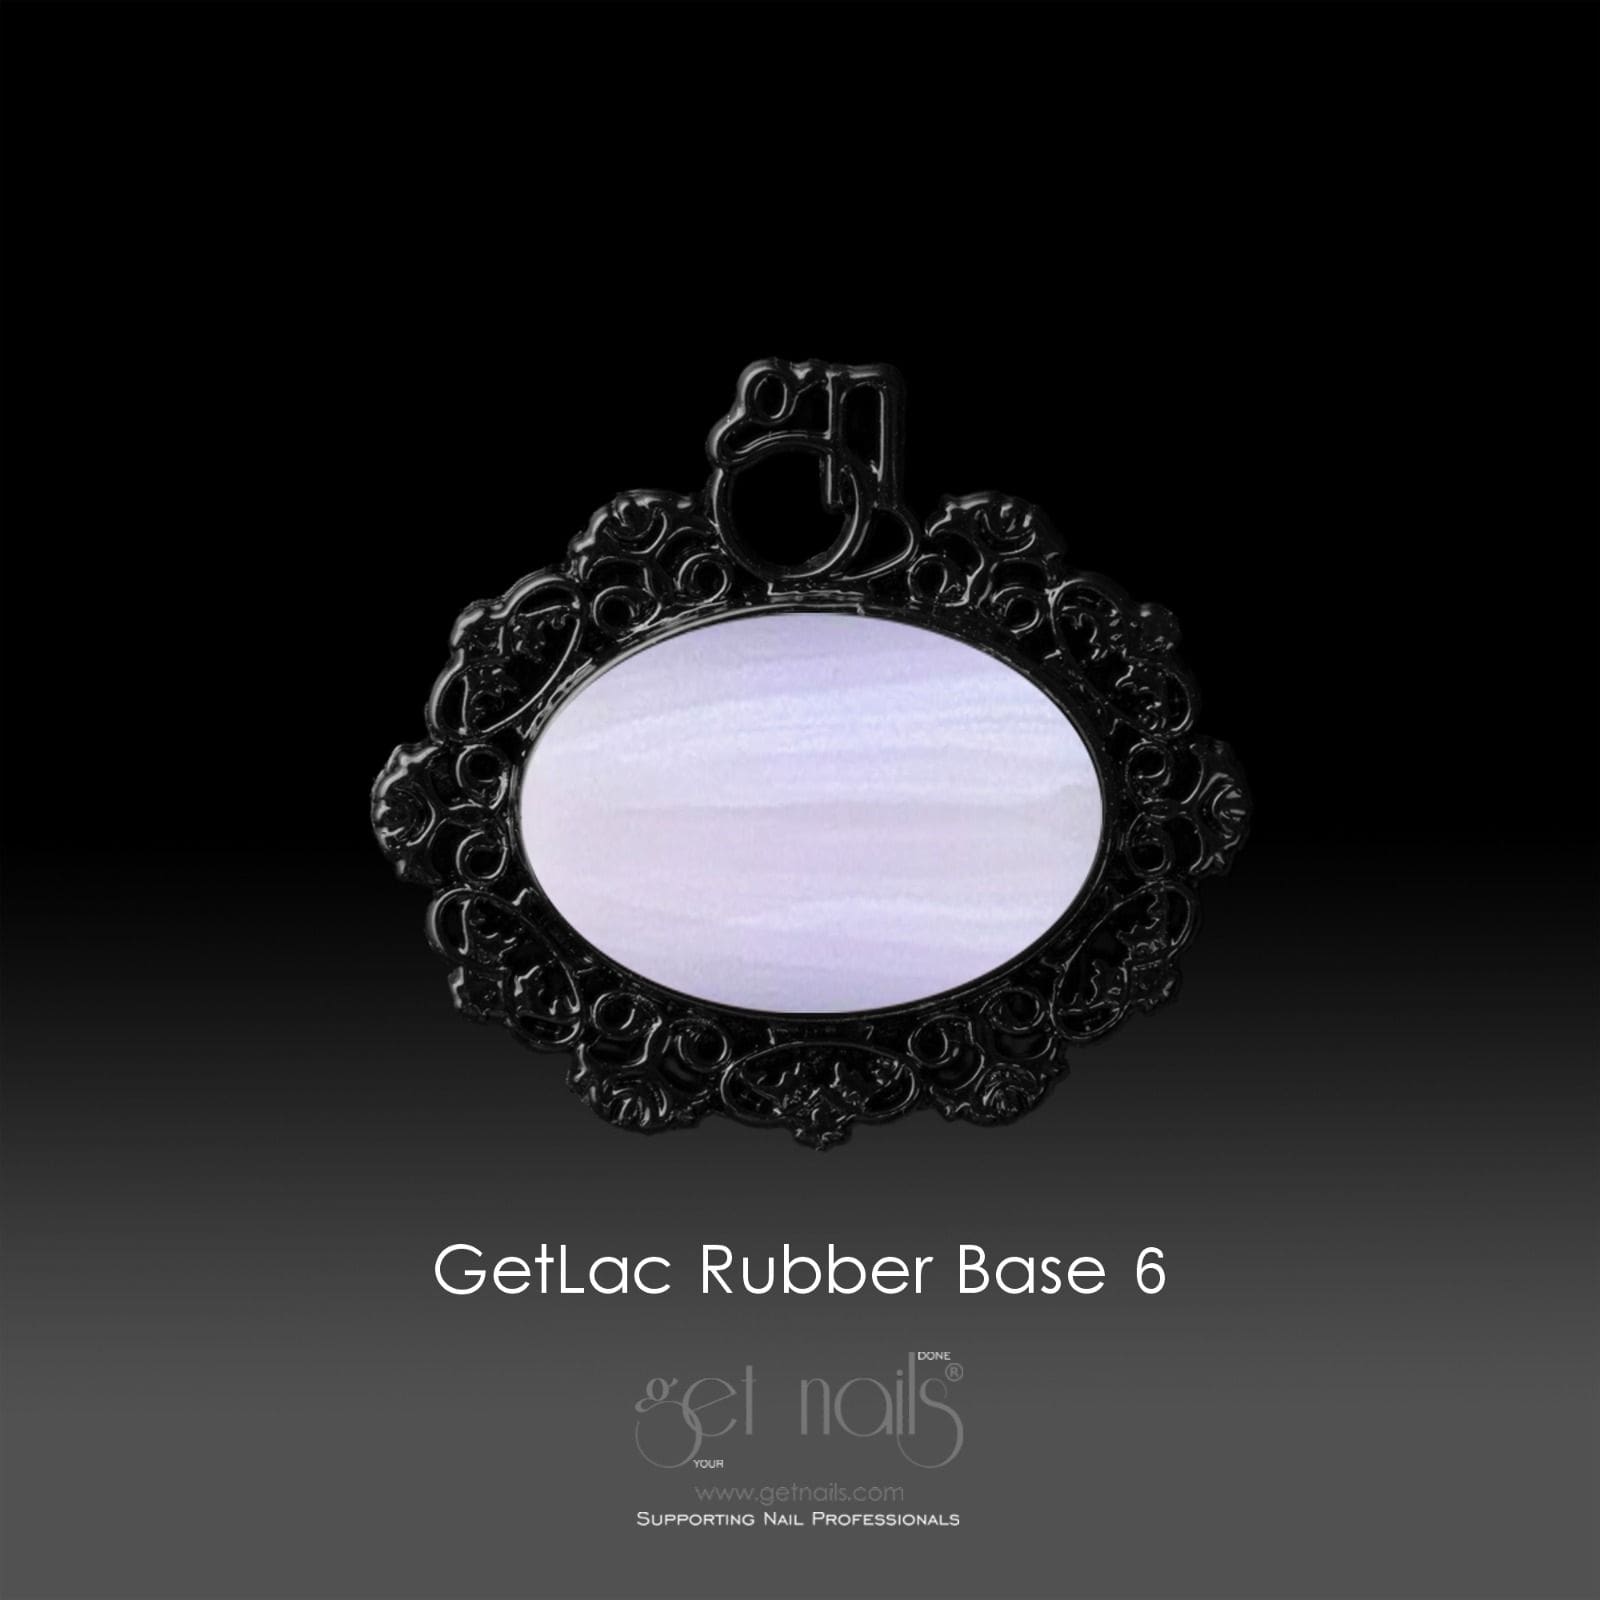 Get Nails Austria - GetLac Rubber Base 6 15g